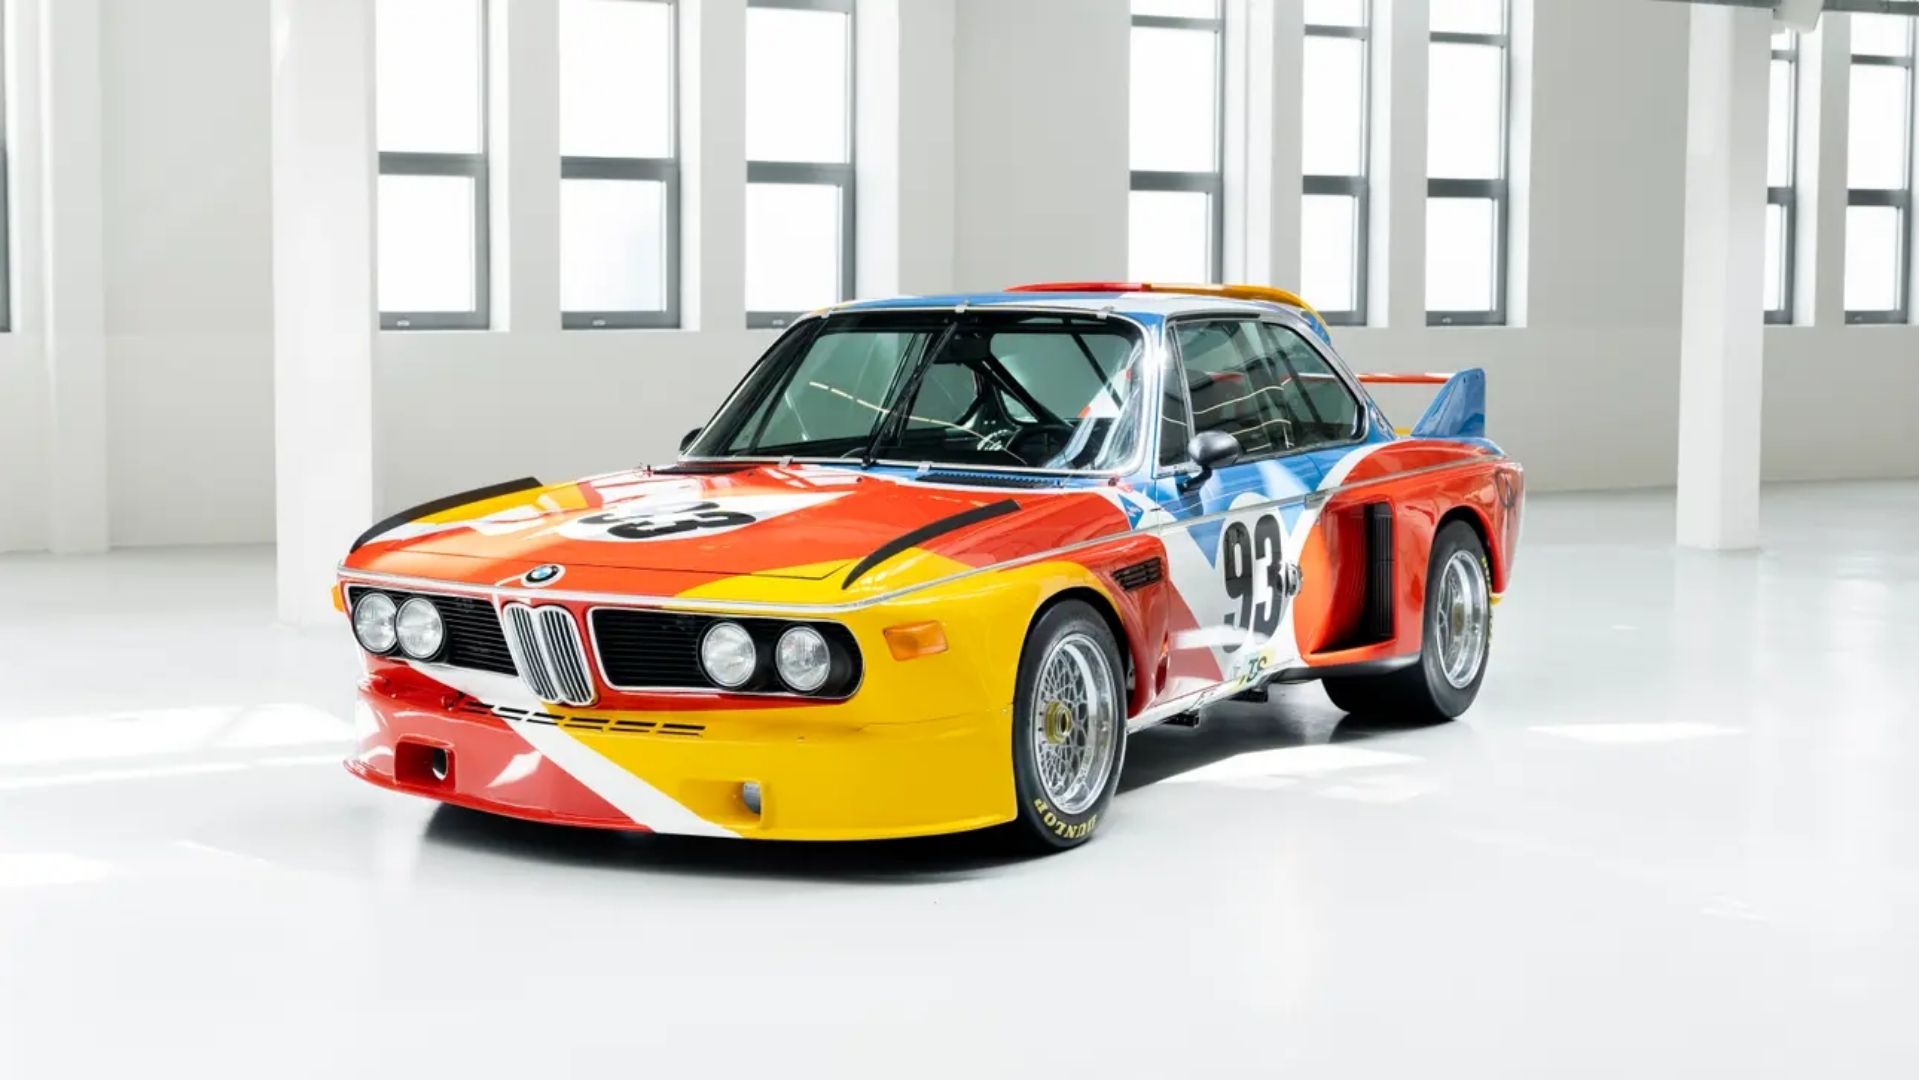 BMW E9 3.0 CSL by Alexander Calder